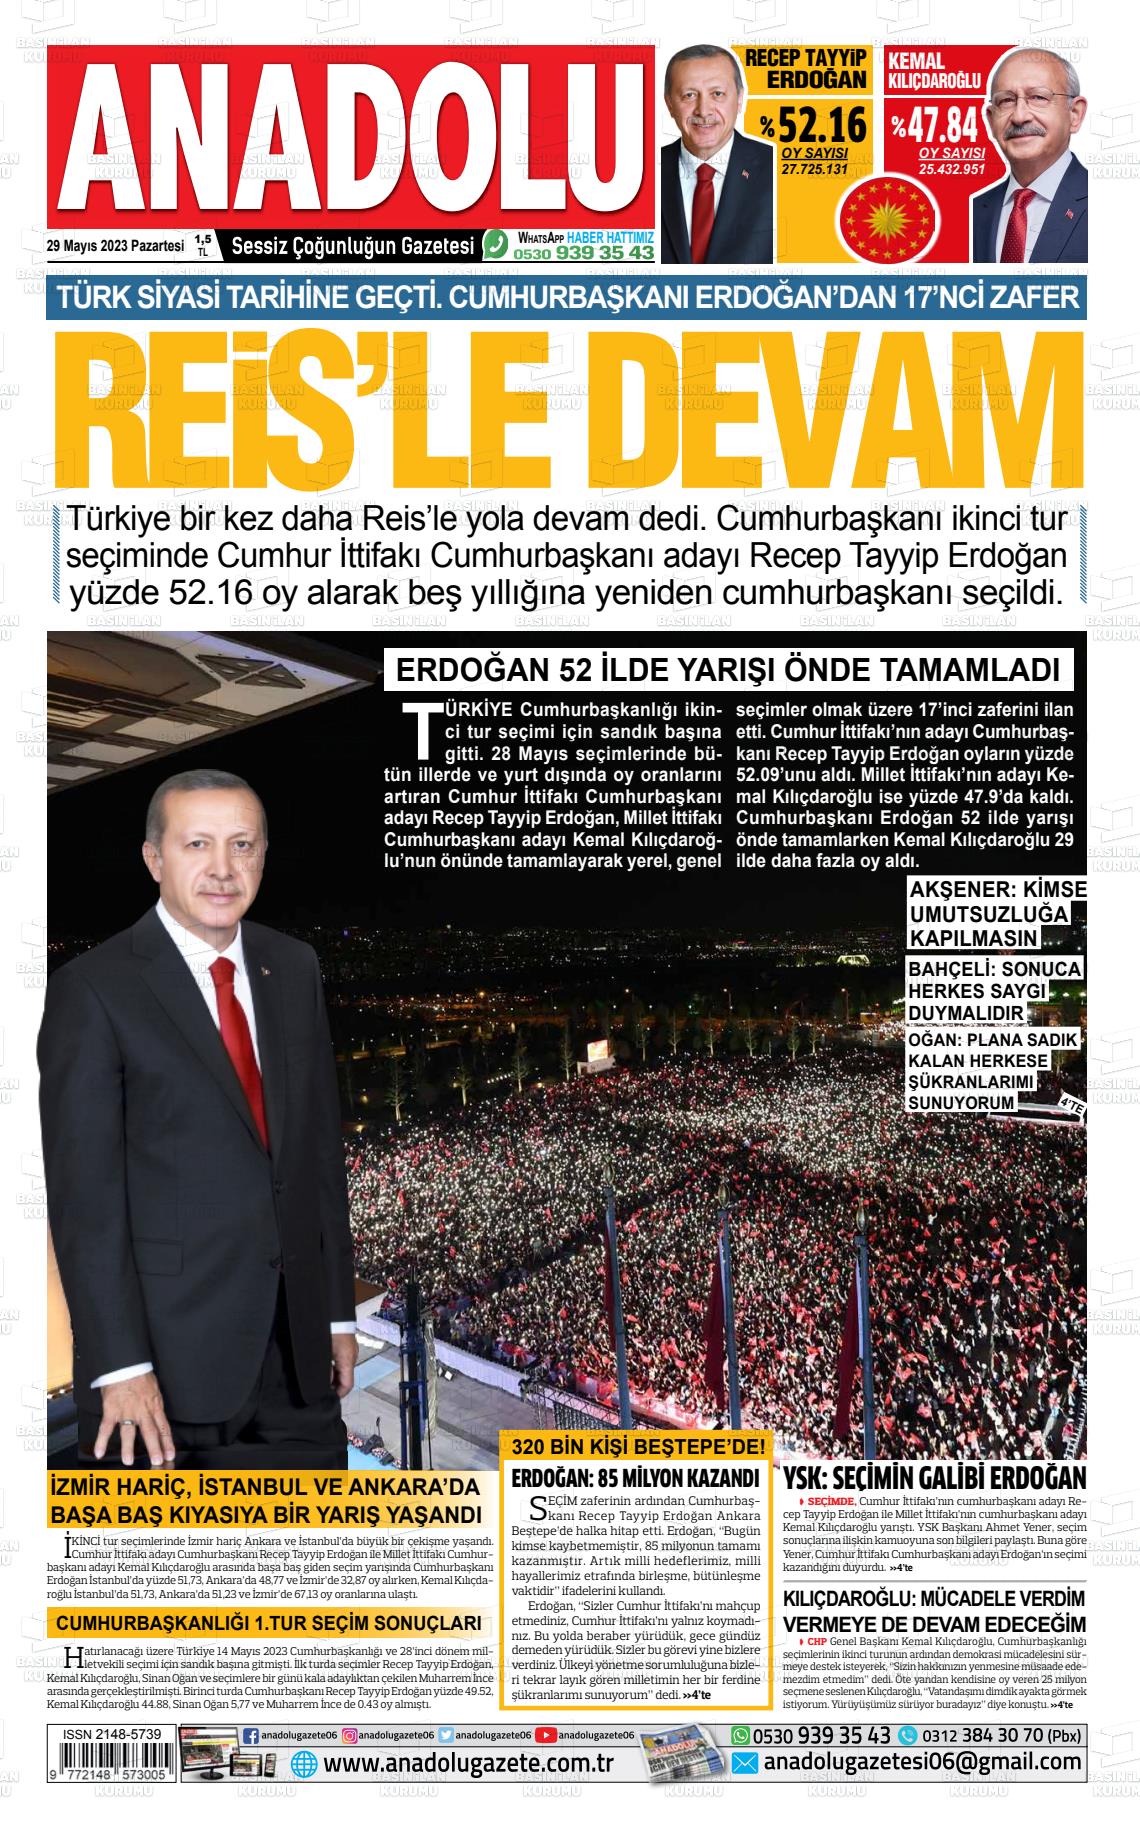 29 Mayıs 2023 Ankara Anadolu Gazete Manşeti